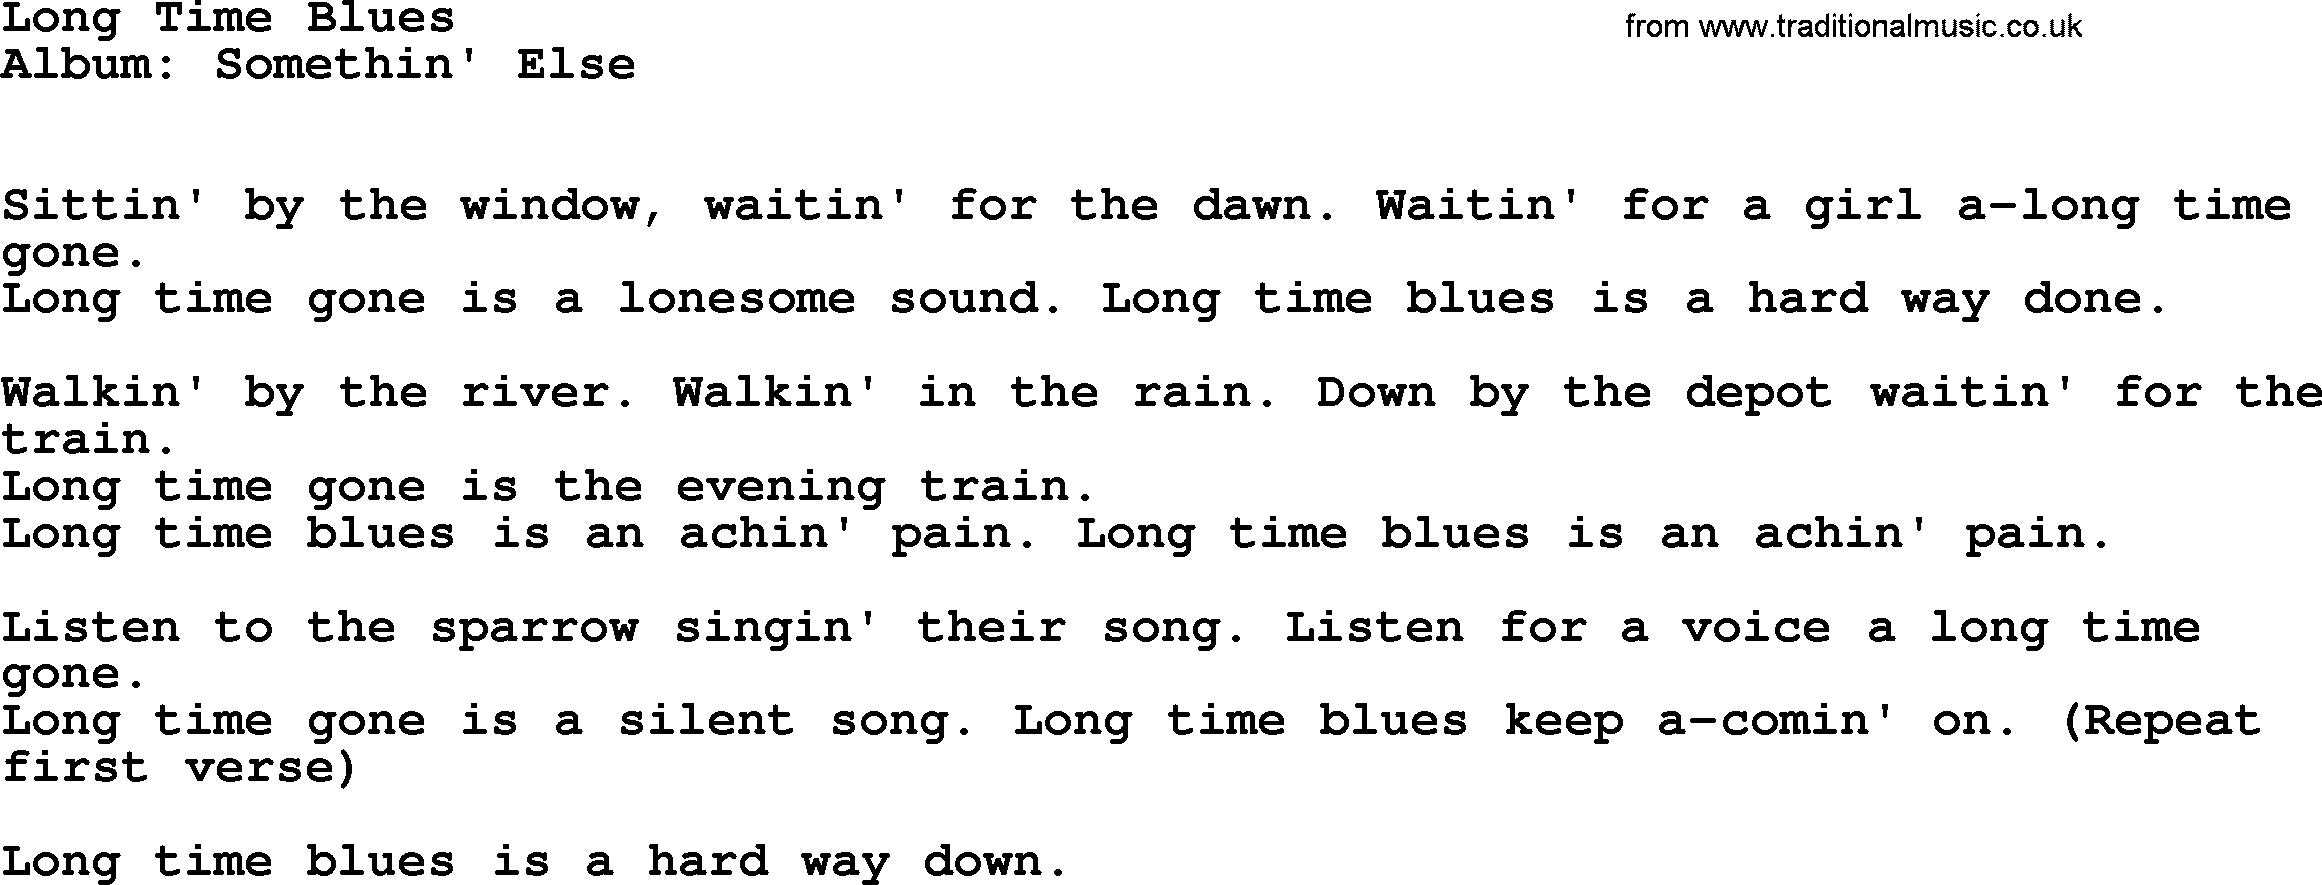 Kingston Trio song Long Time Blues, lyrics